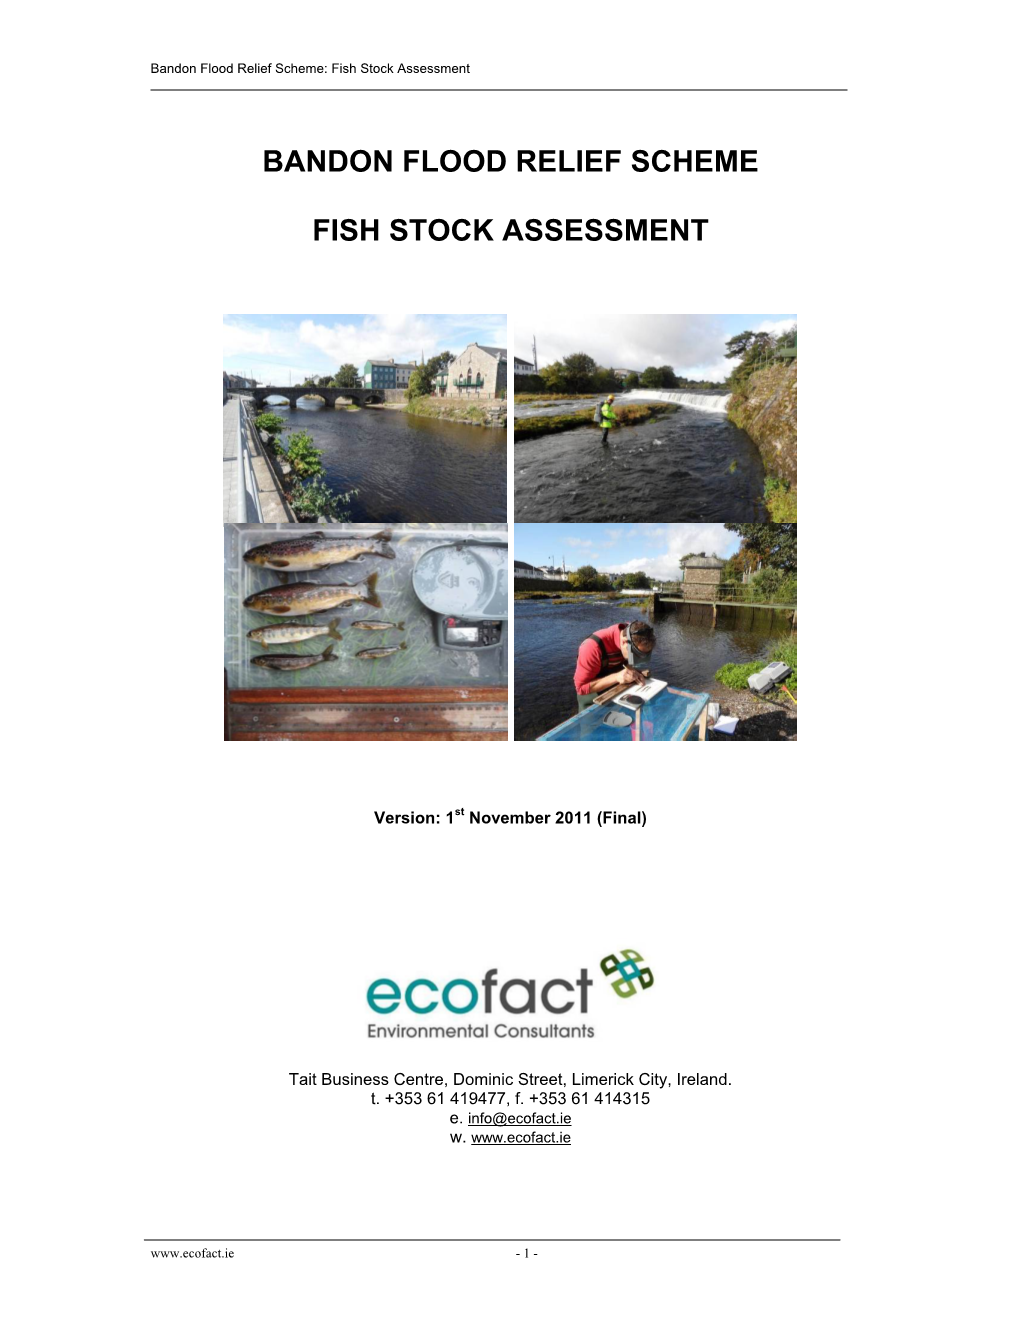 Bandon Flood Relief Scheme Fish Stock Assessment